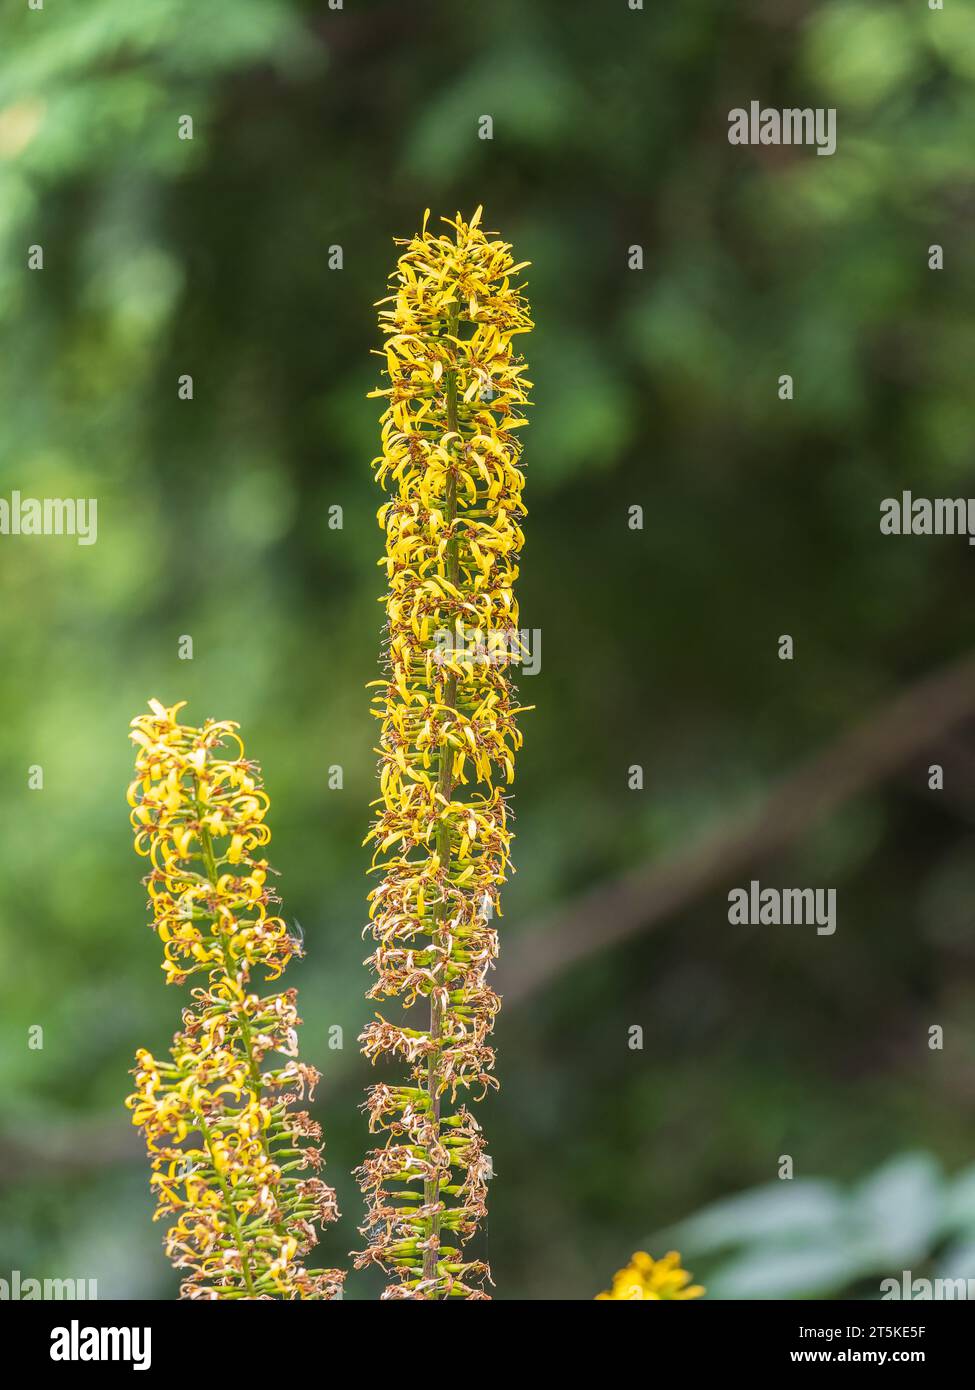 Yellow inflorescences of Ligularia przewalskii in garden. Close up of ligularia przewalskii flowers in bloom Stock Photo